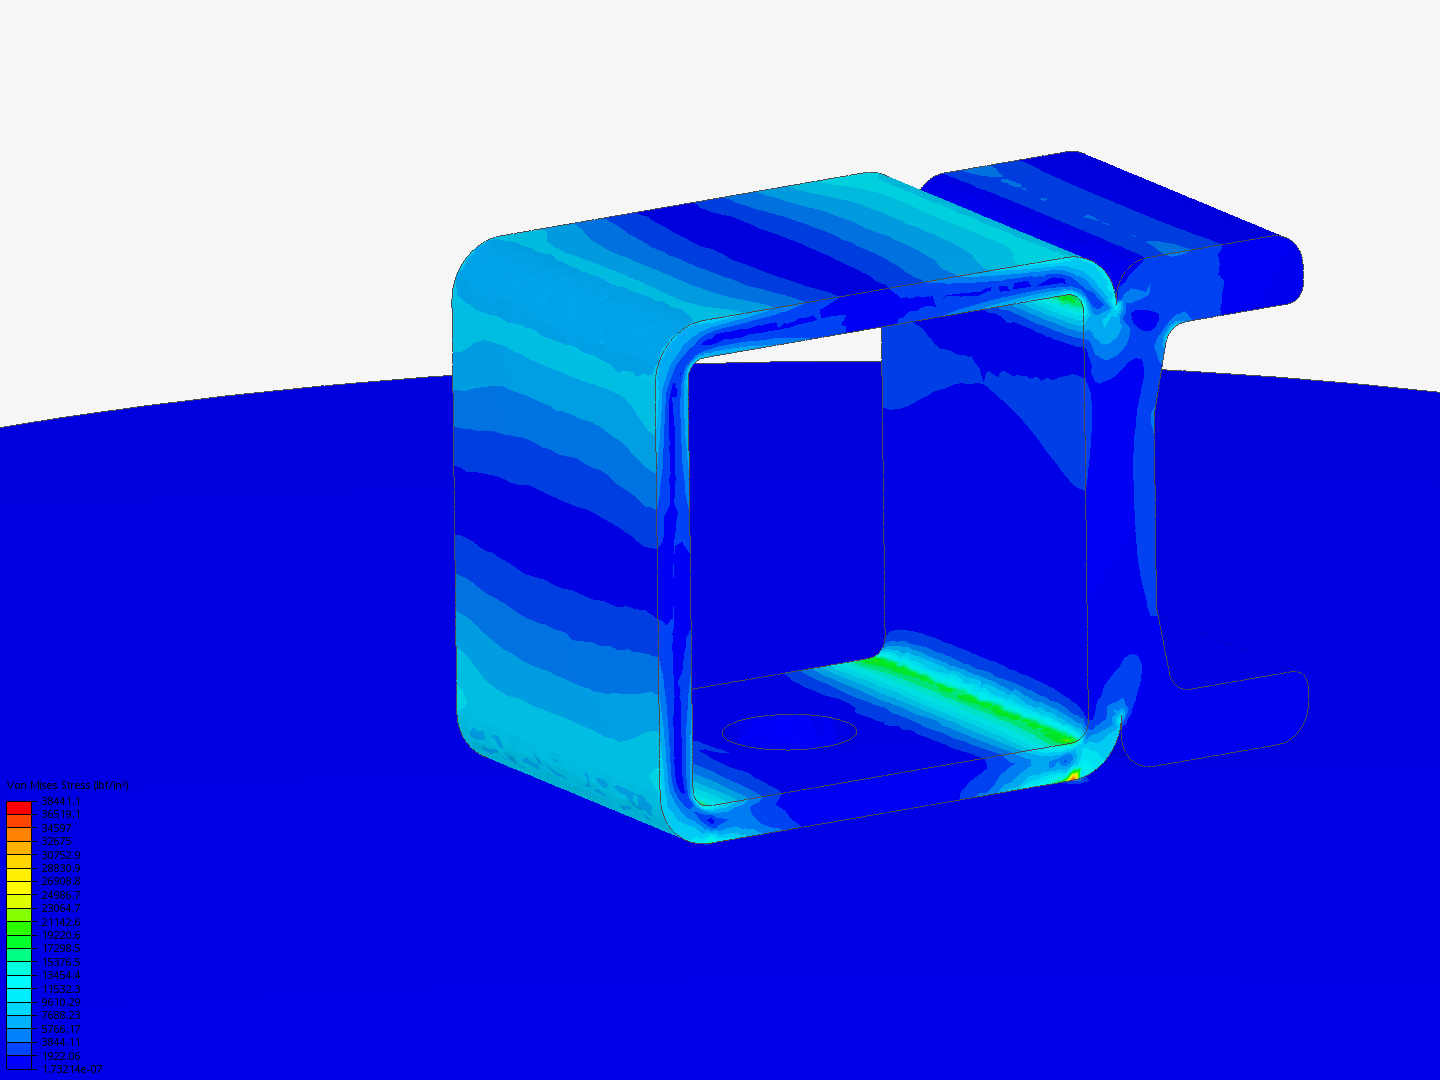 HVR0 simulation image